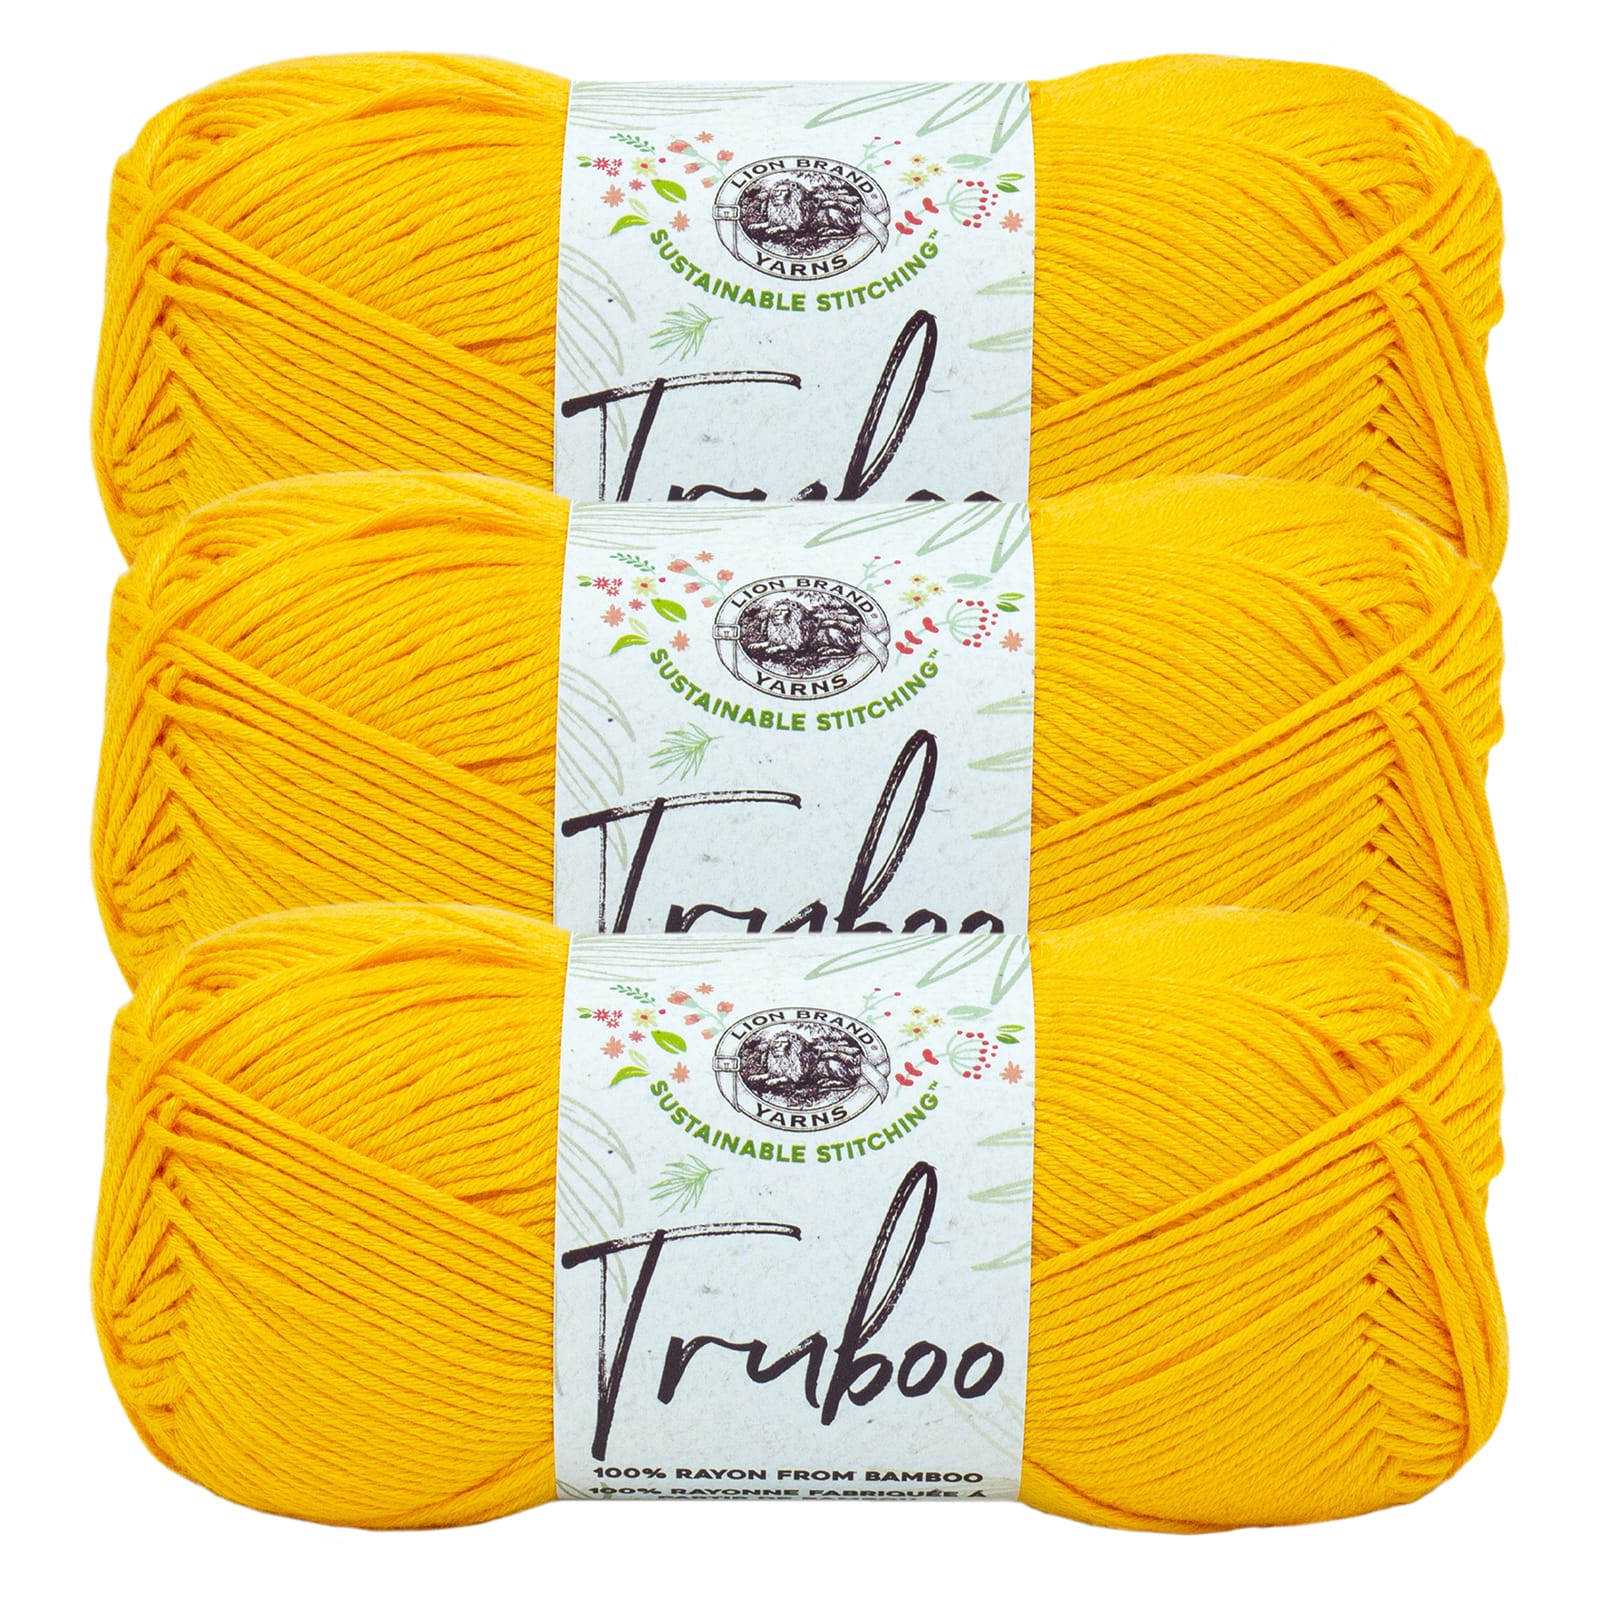 Truboo Lion Brand 100% Bamboo Yarn 